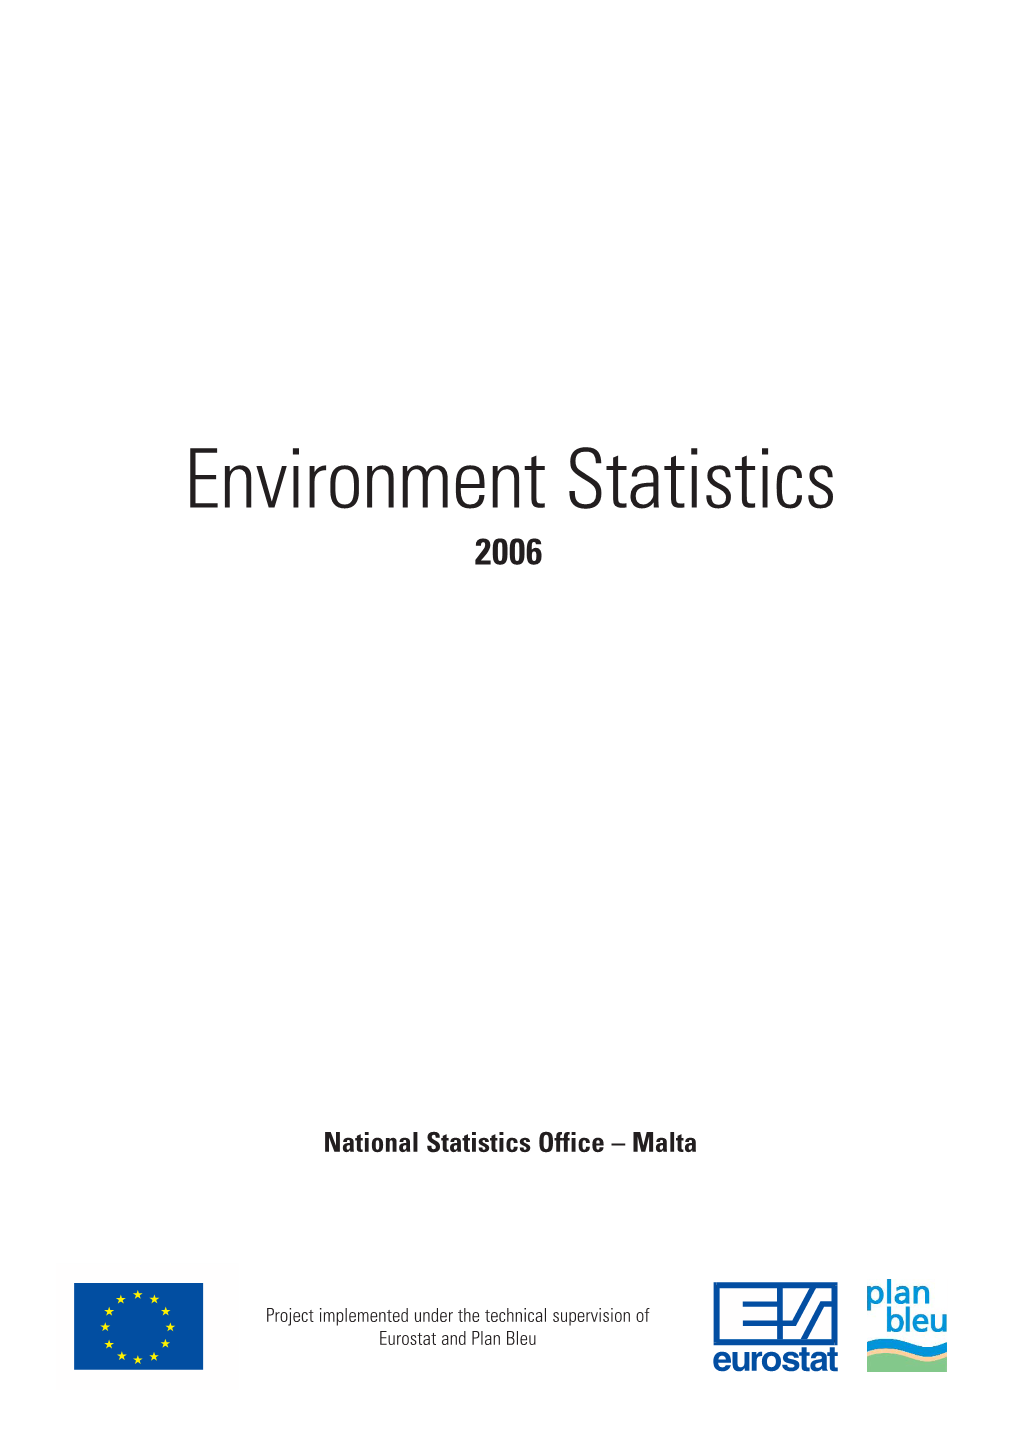 Environment Statistics 2006